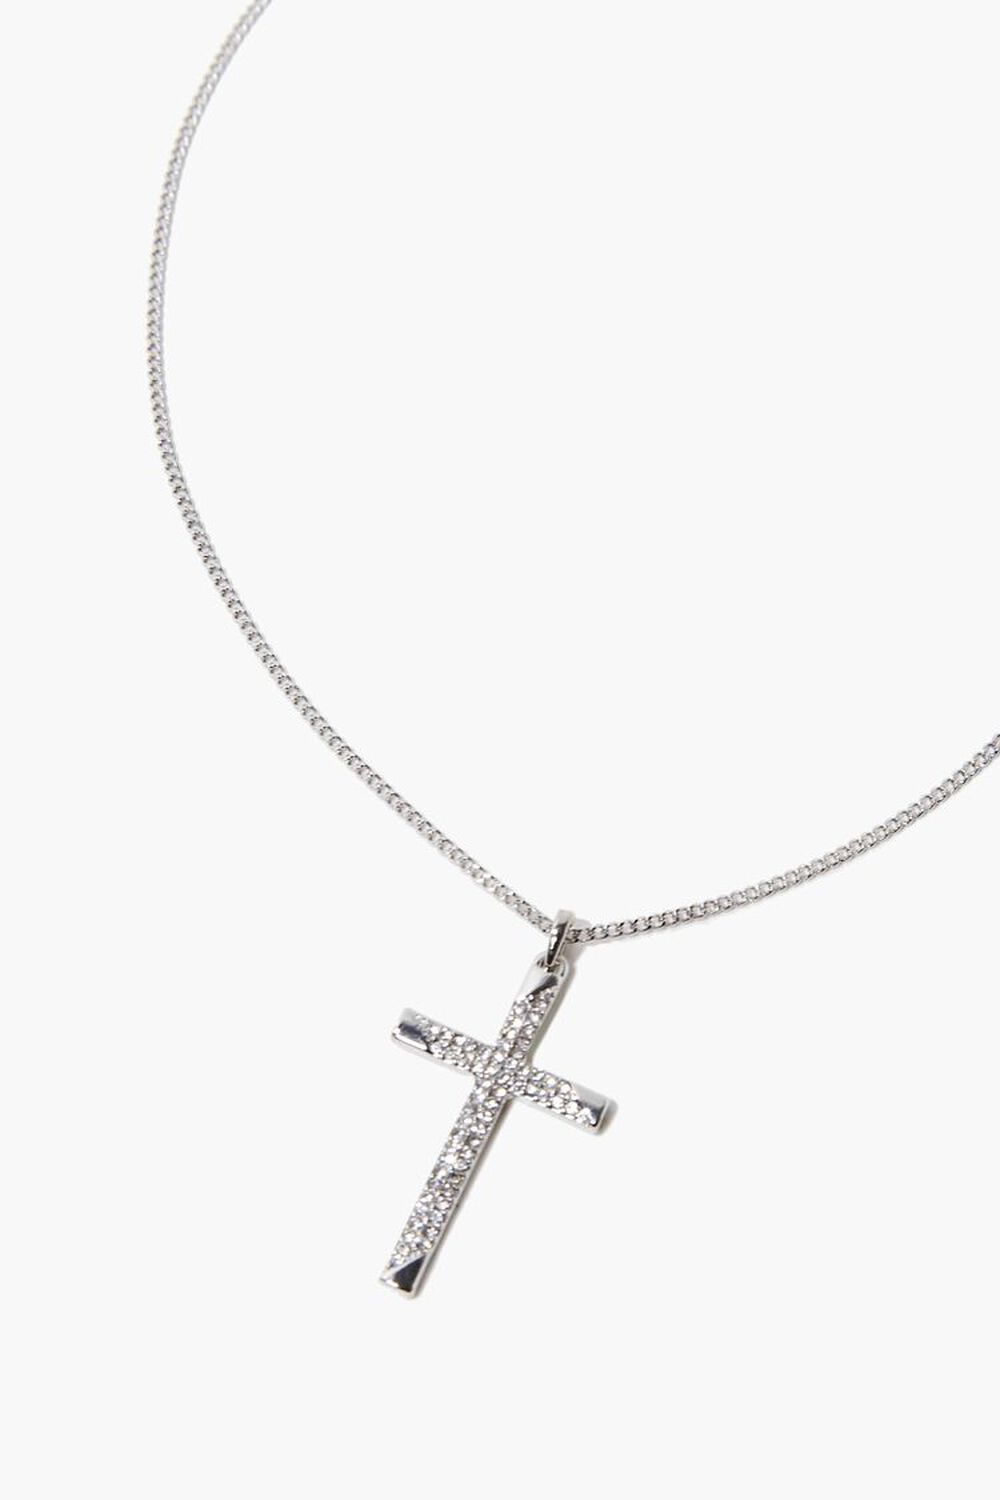 SILVER Rhinestone Cross Pendant Necklace, image 1